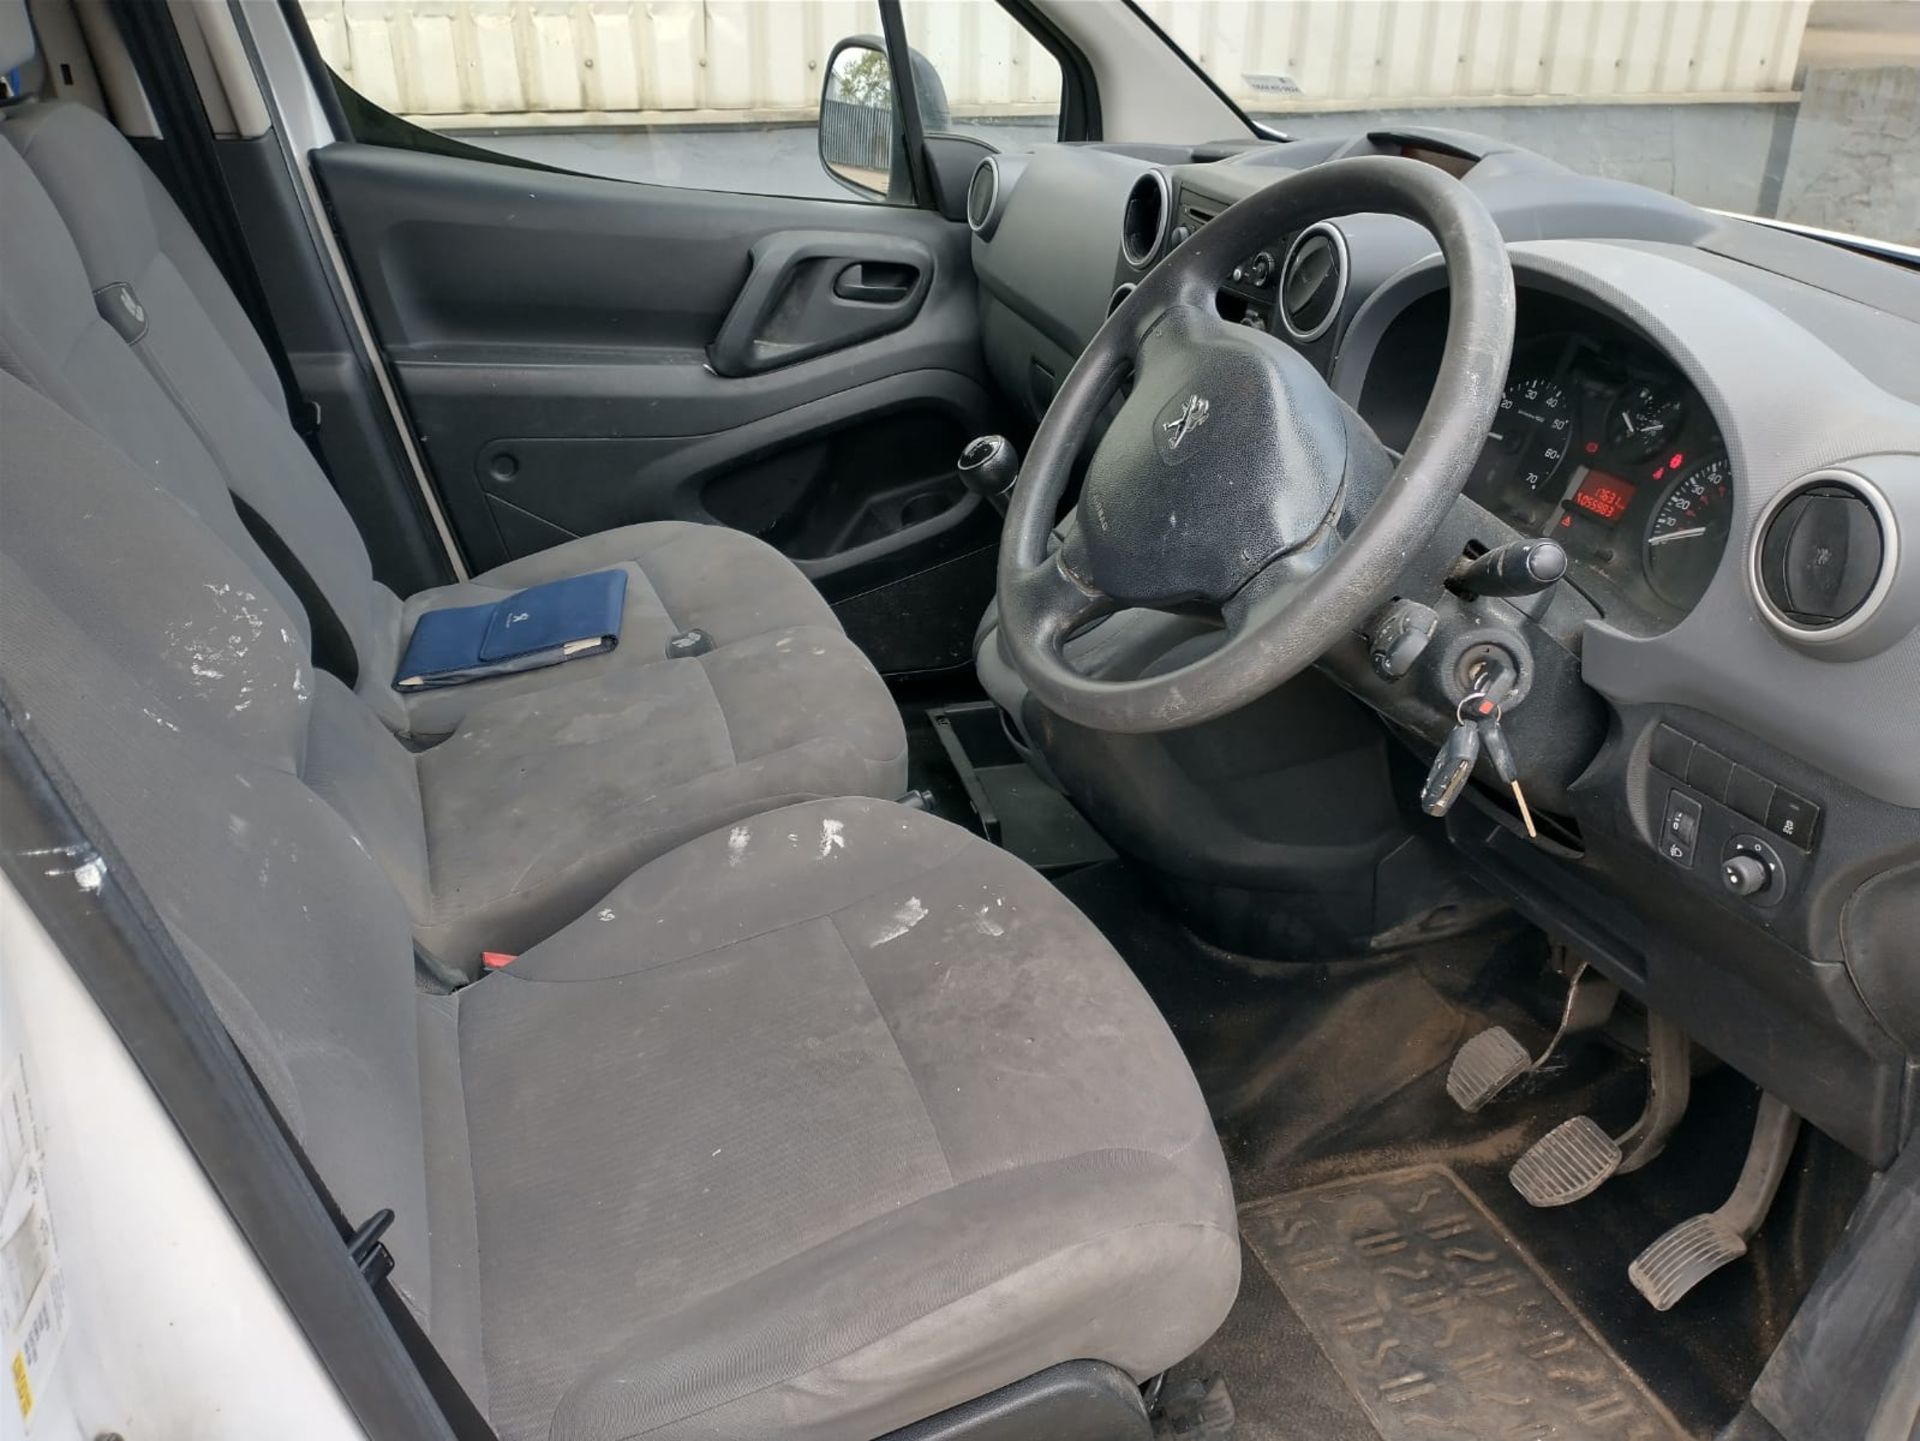 2015 Peugeot Partner Panel Van - CL505 - Location: Corby - Image 7 of 15